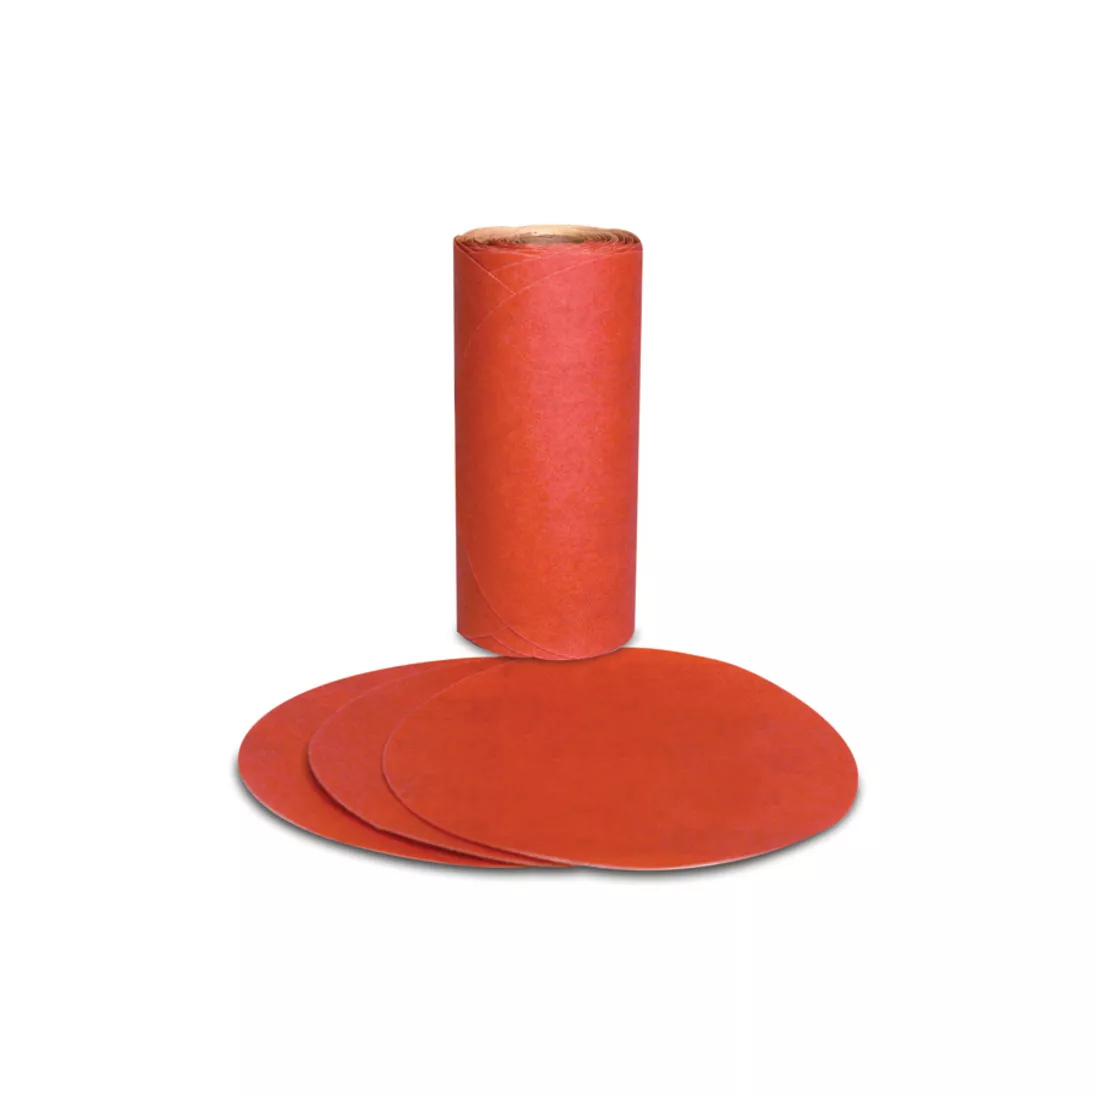 3M™ Red Abrasive PSA Disc, 01611, 5 in, 40, 25 discs per carton, 5
cartons per case